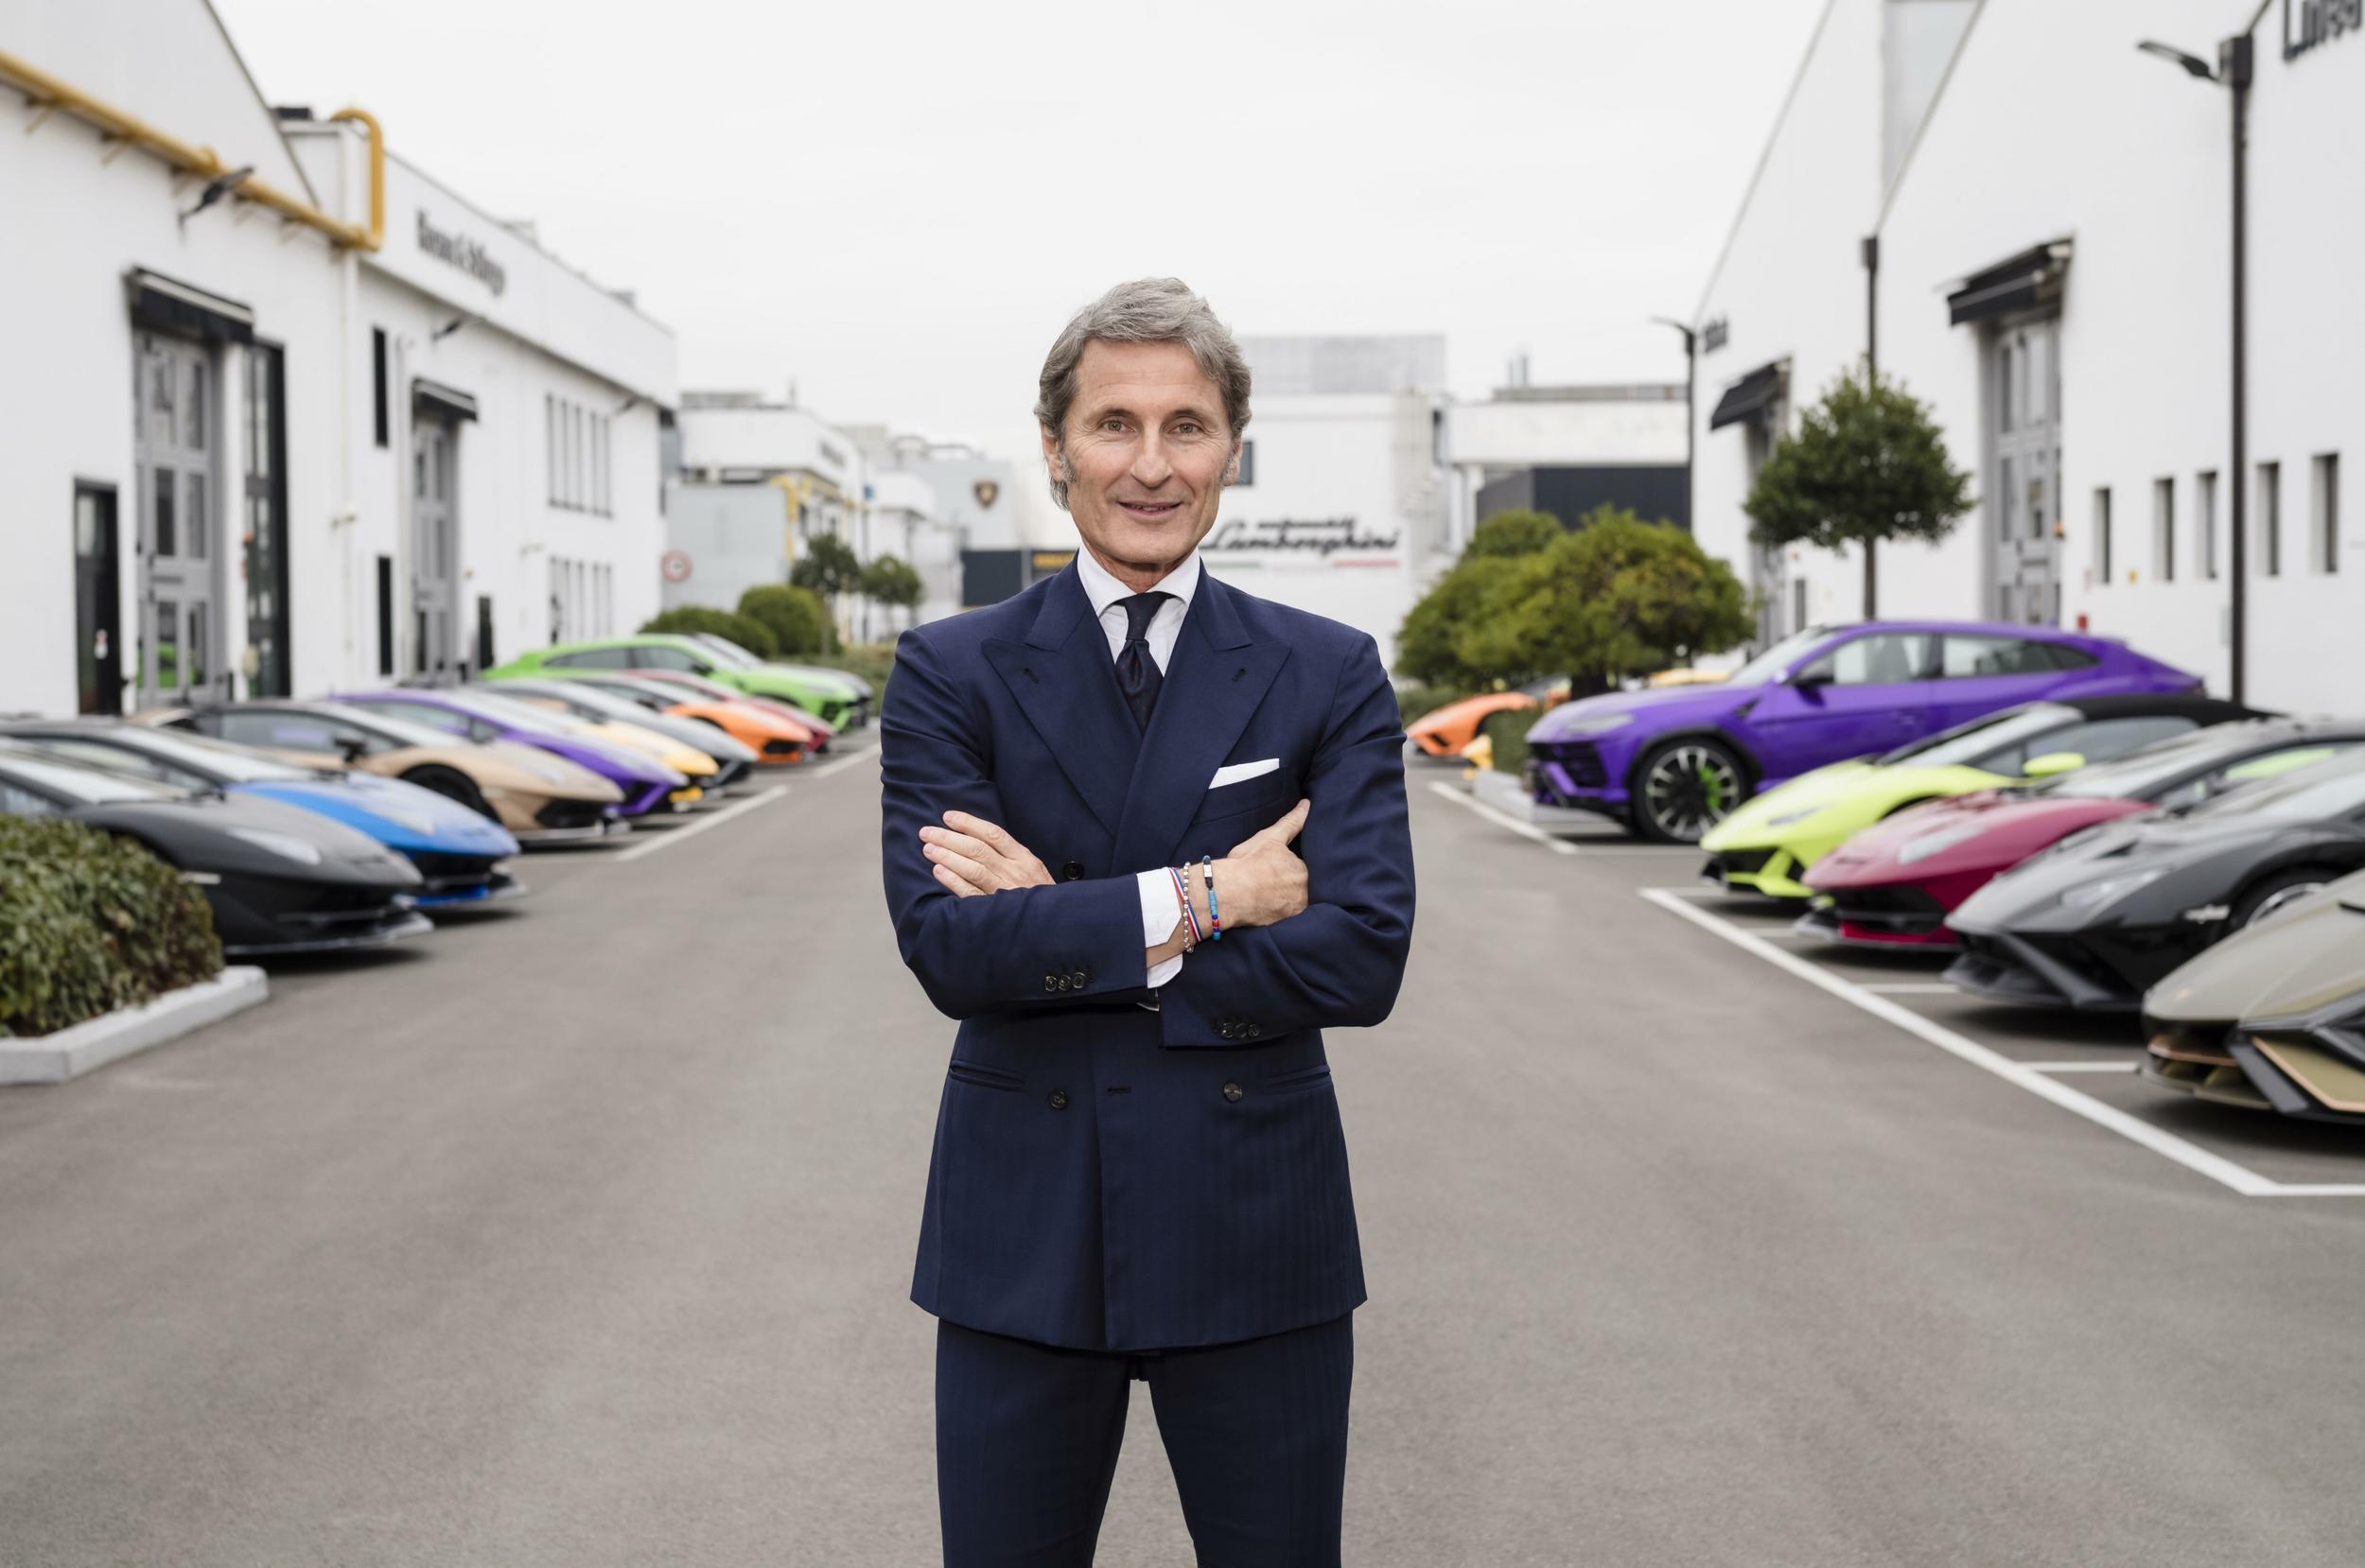 Lamborghini under winkelmann’s leadership